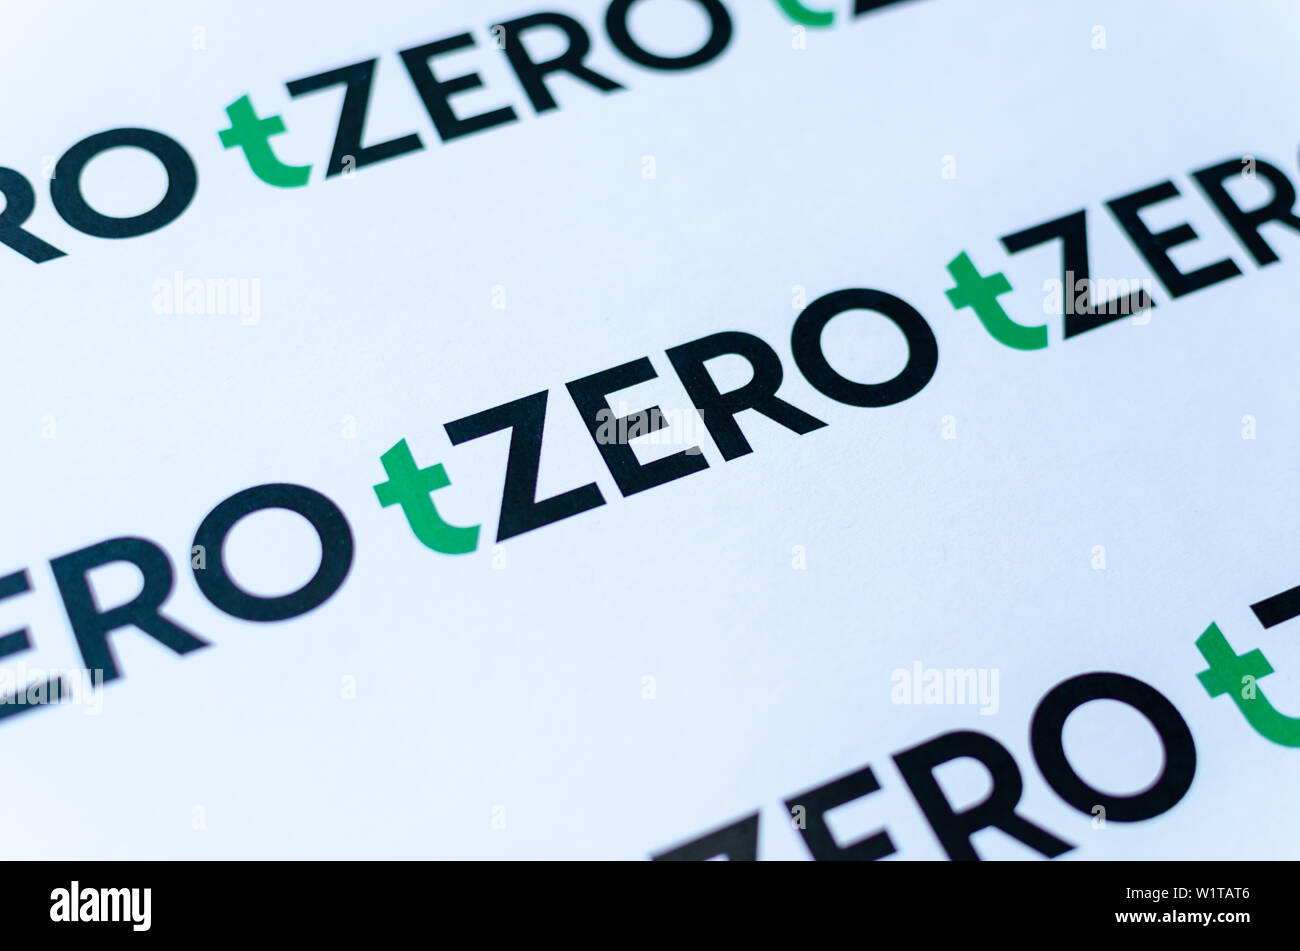 tZero logos on the brochure. Macro photo. Stock Photo